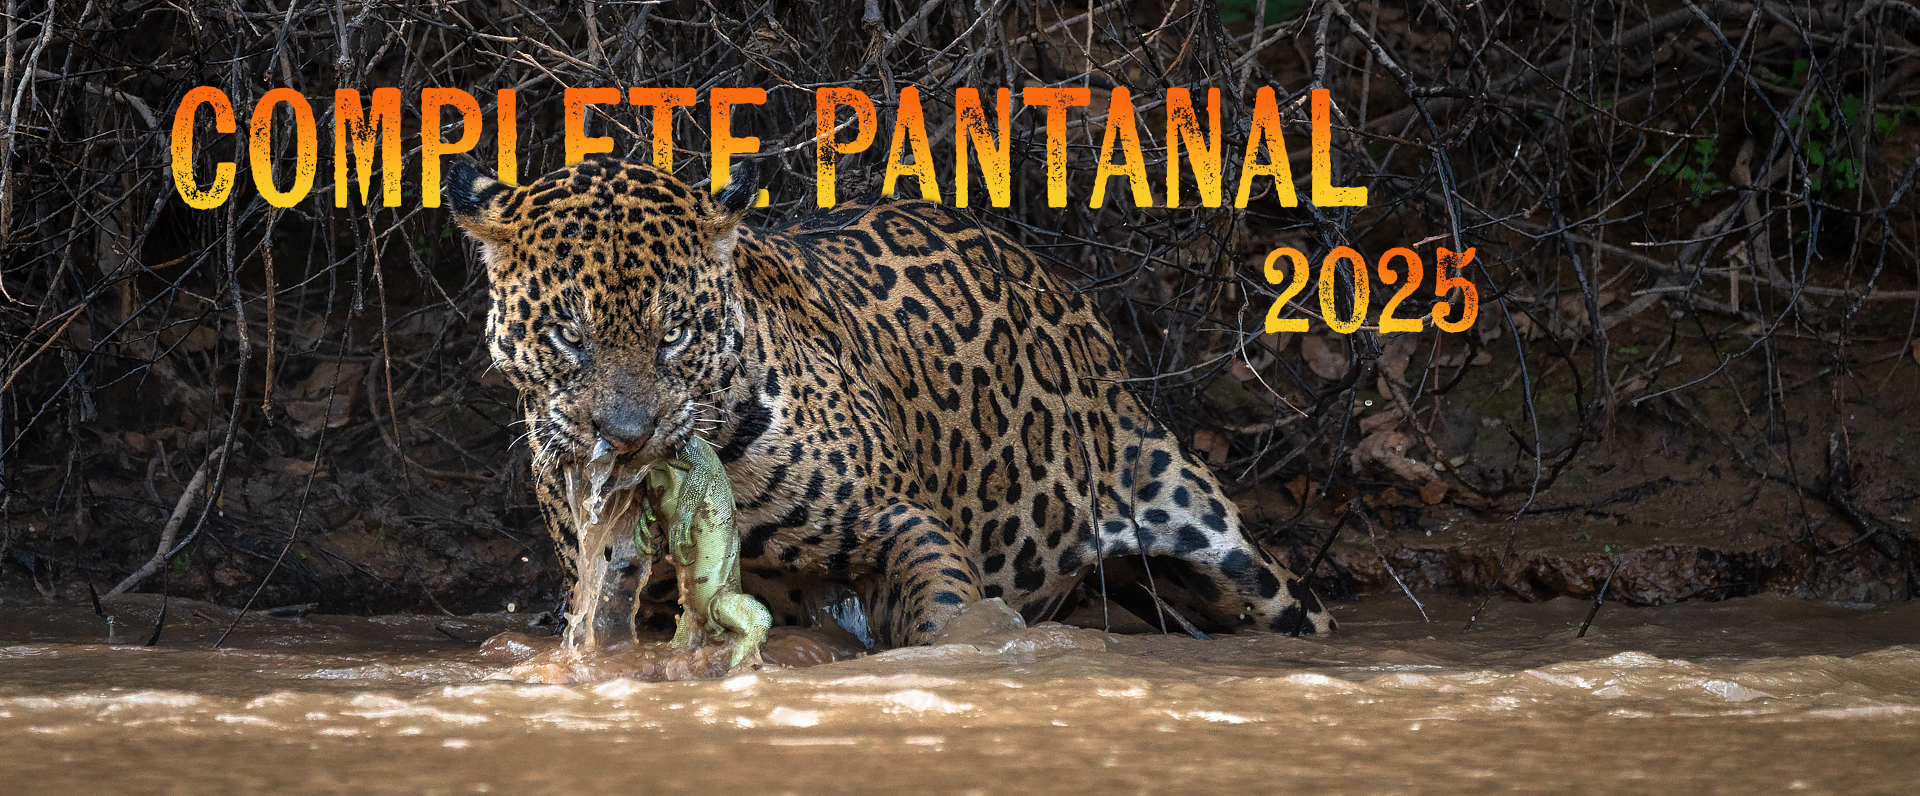 Complete Pantanal 2025